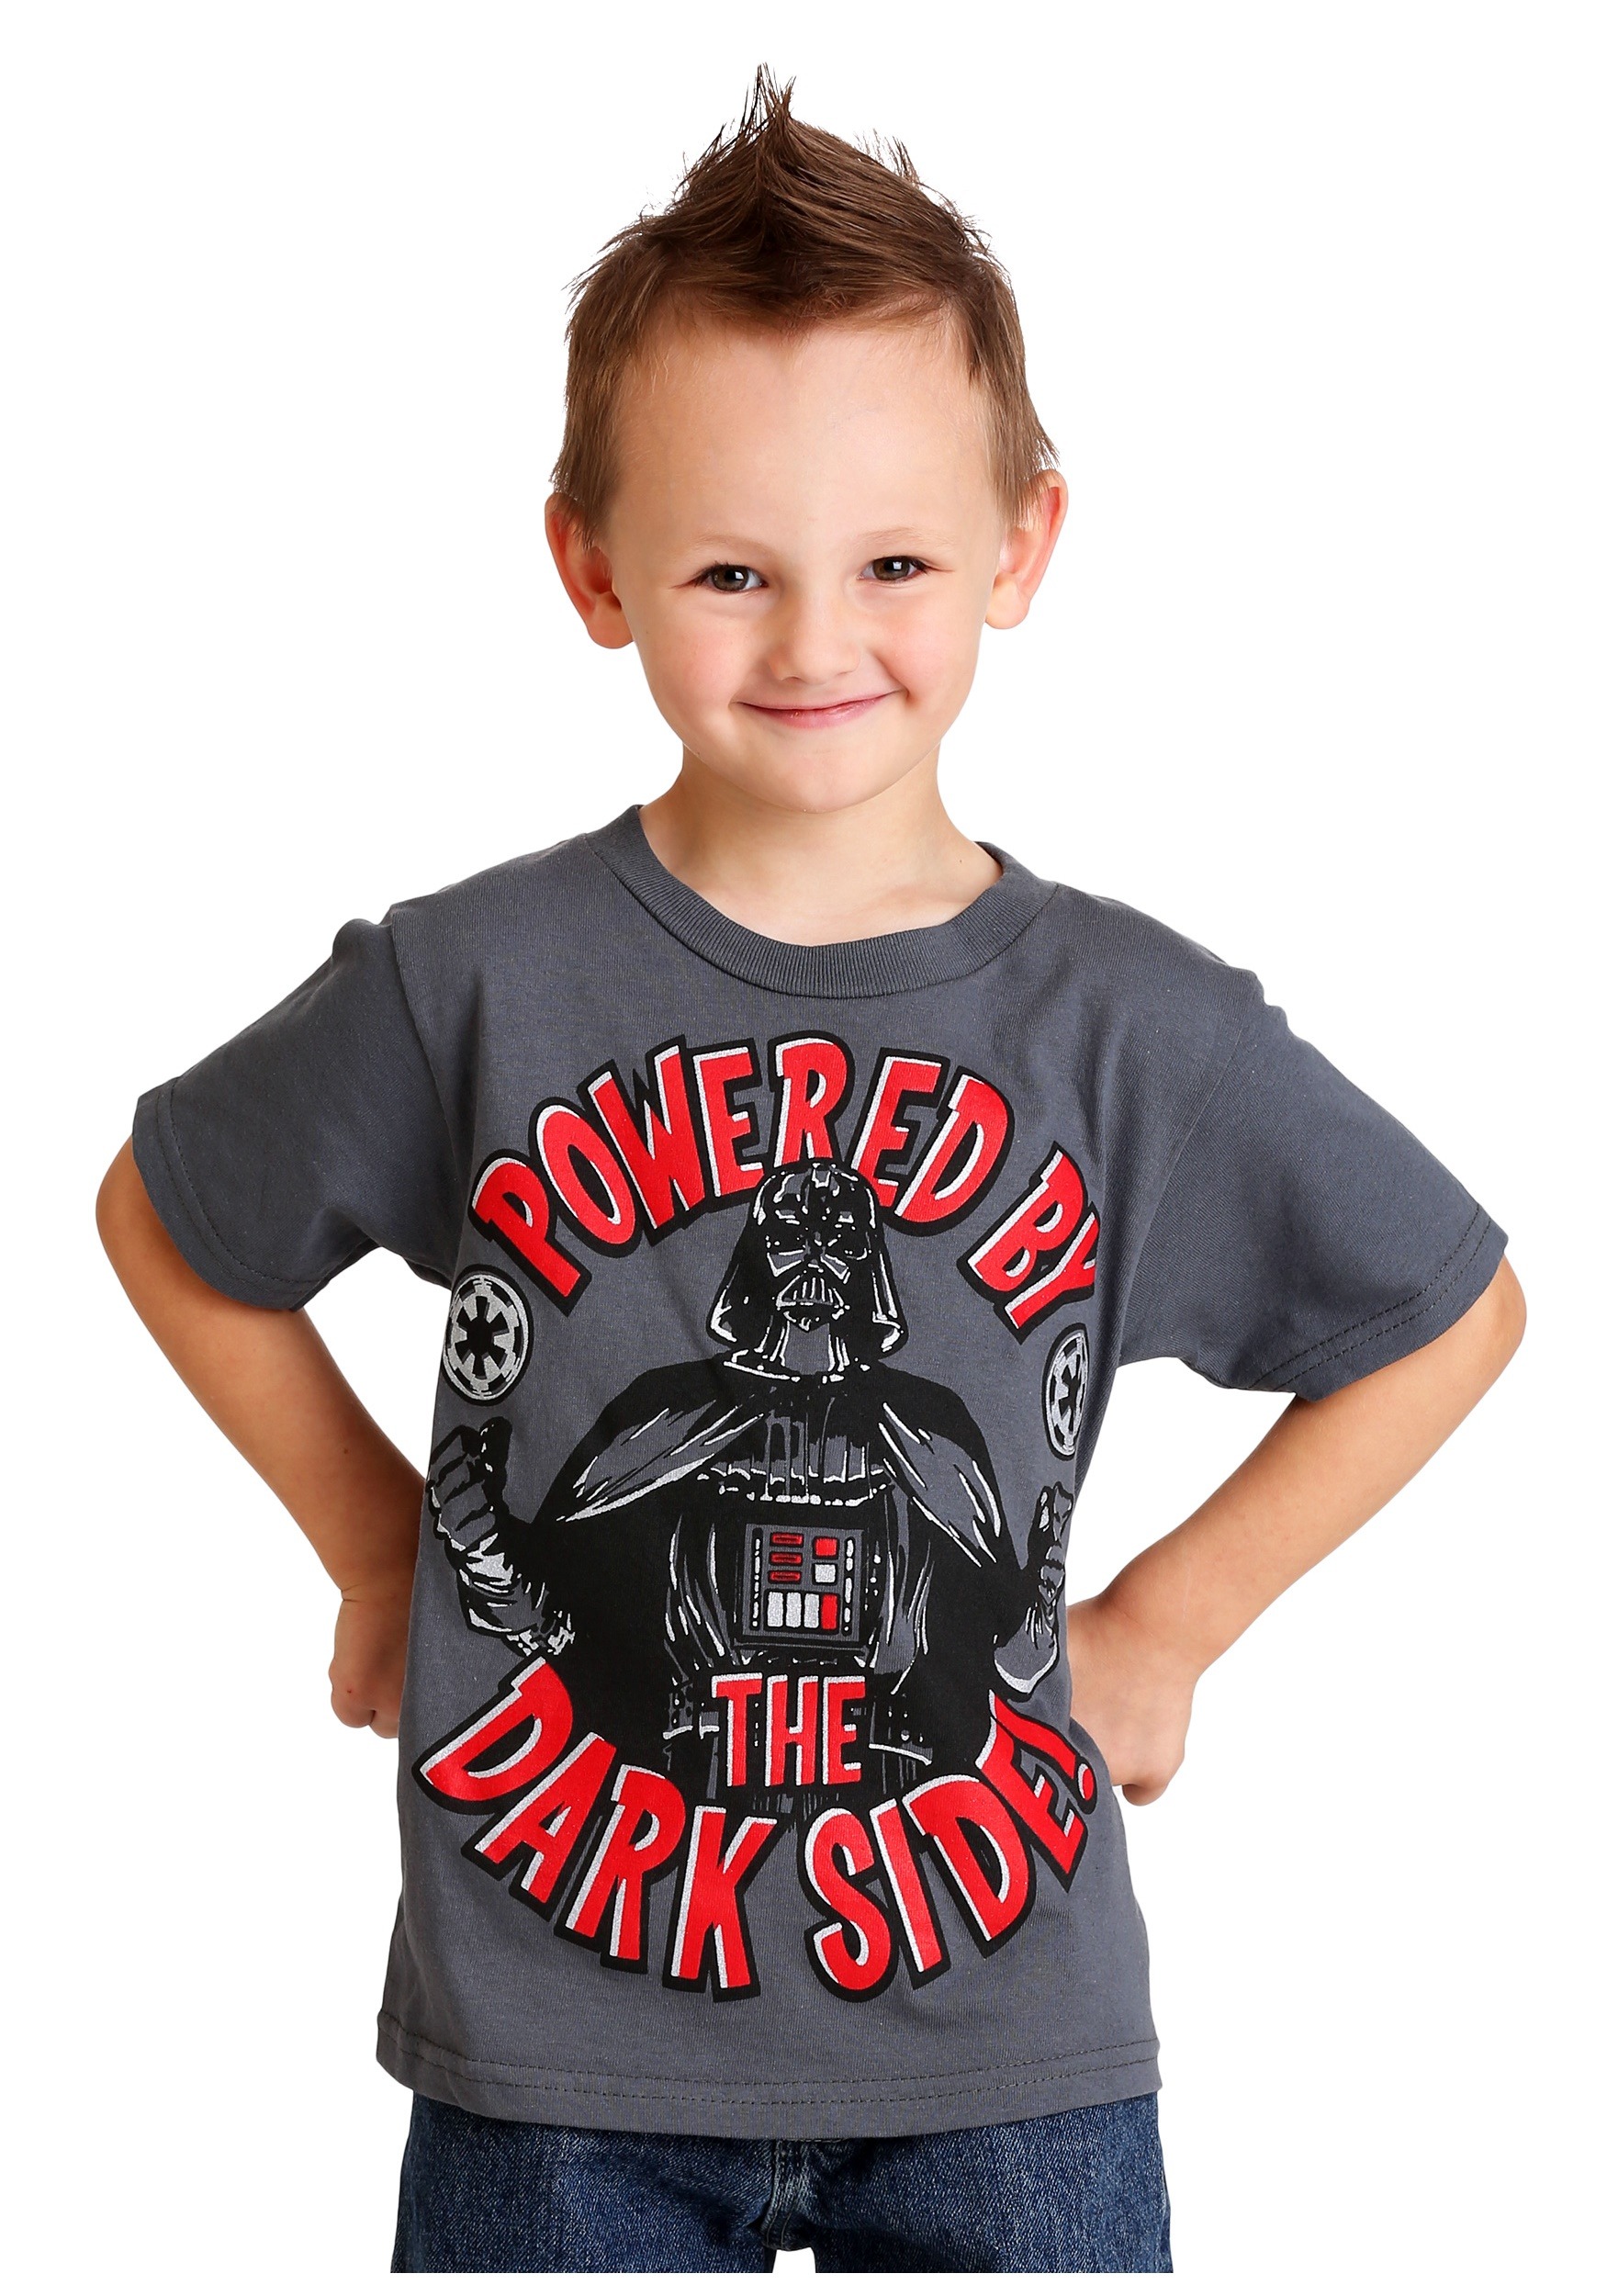 Boys Star Wars Darth Vader Powered By the Dark Side T-Shirt